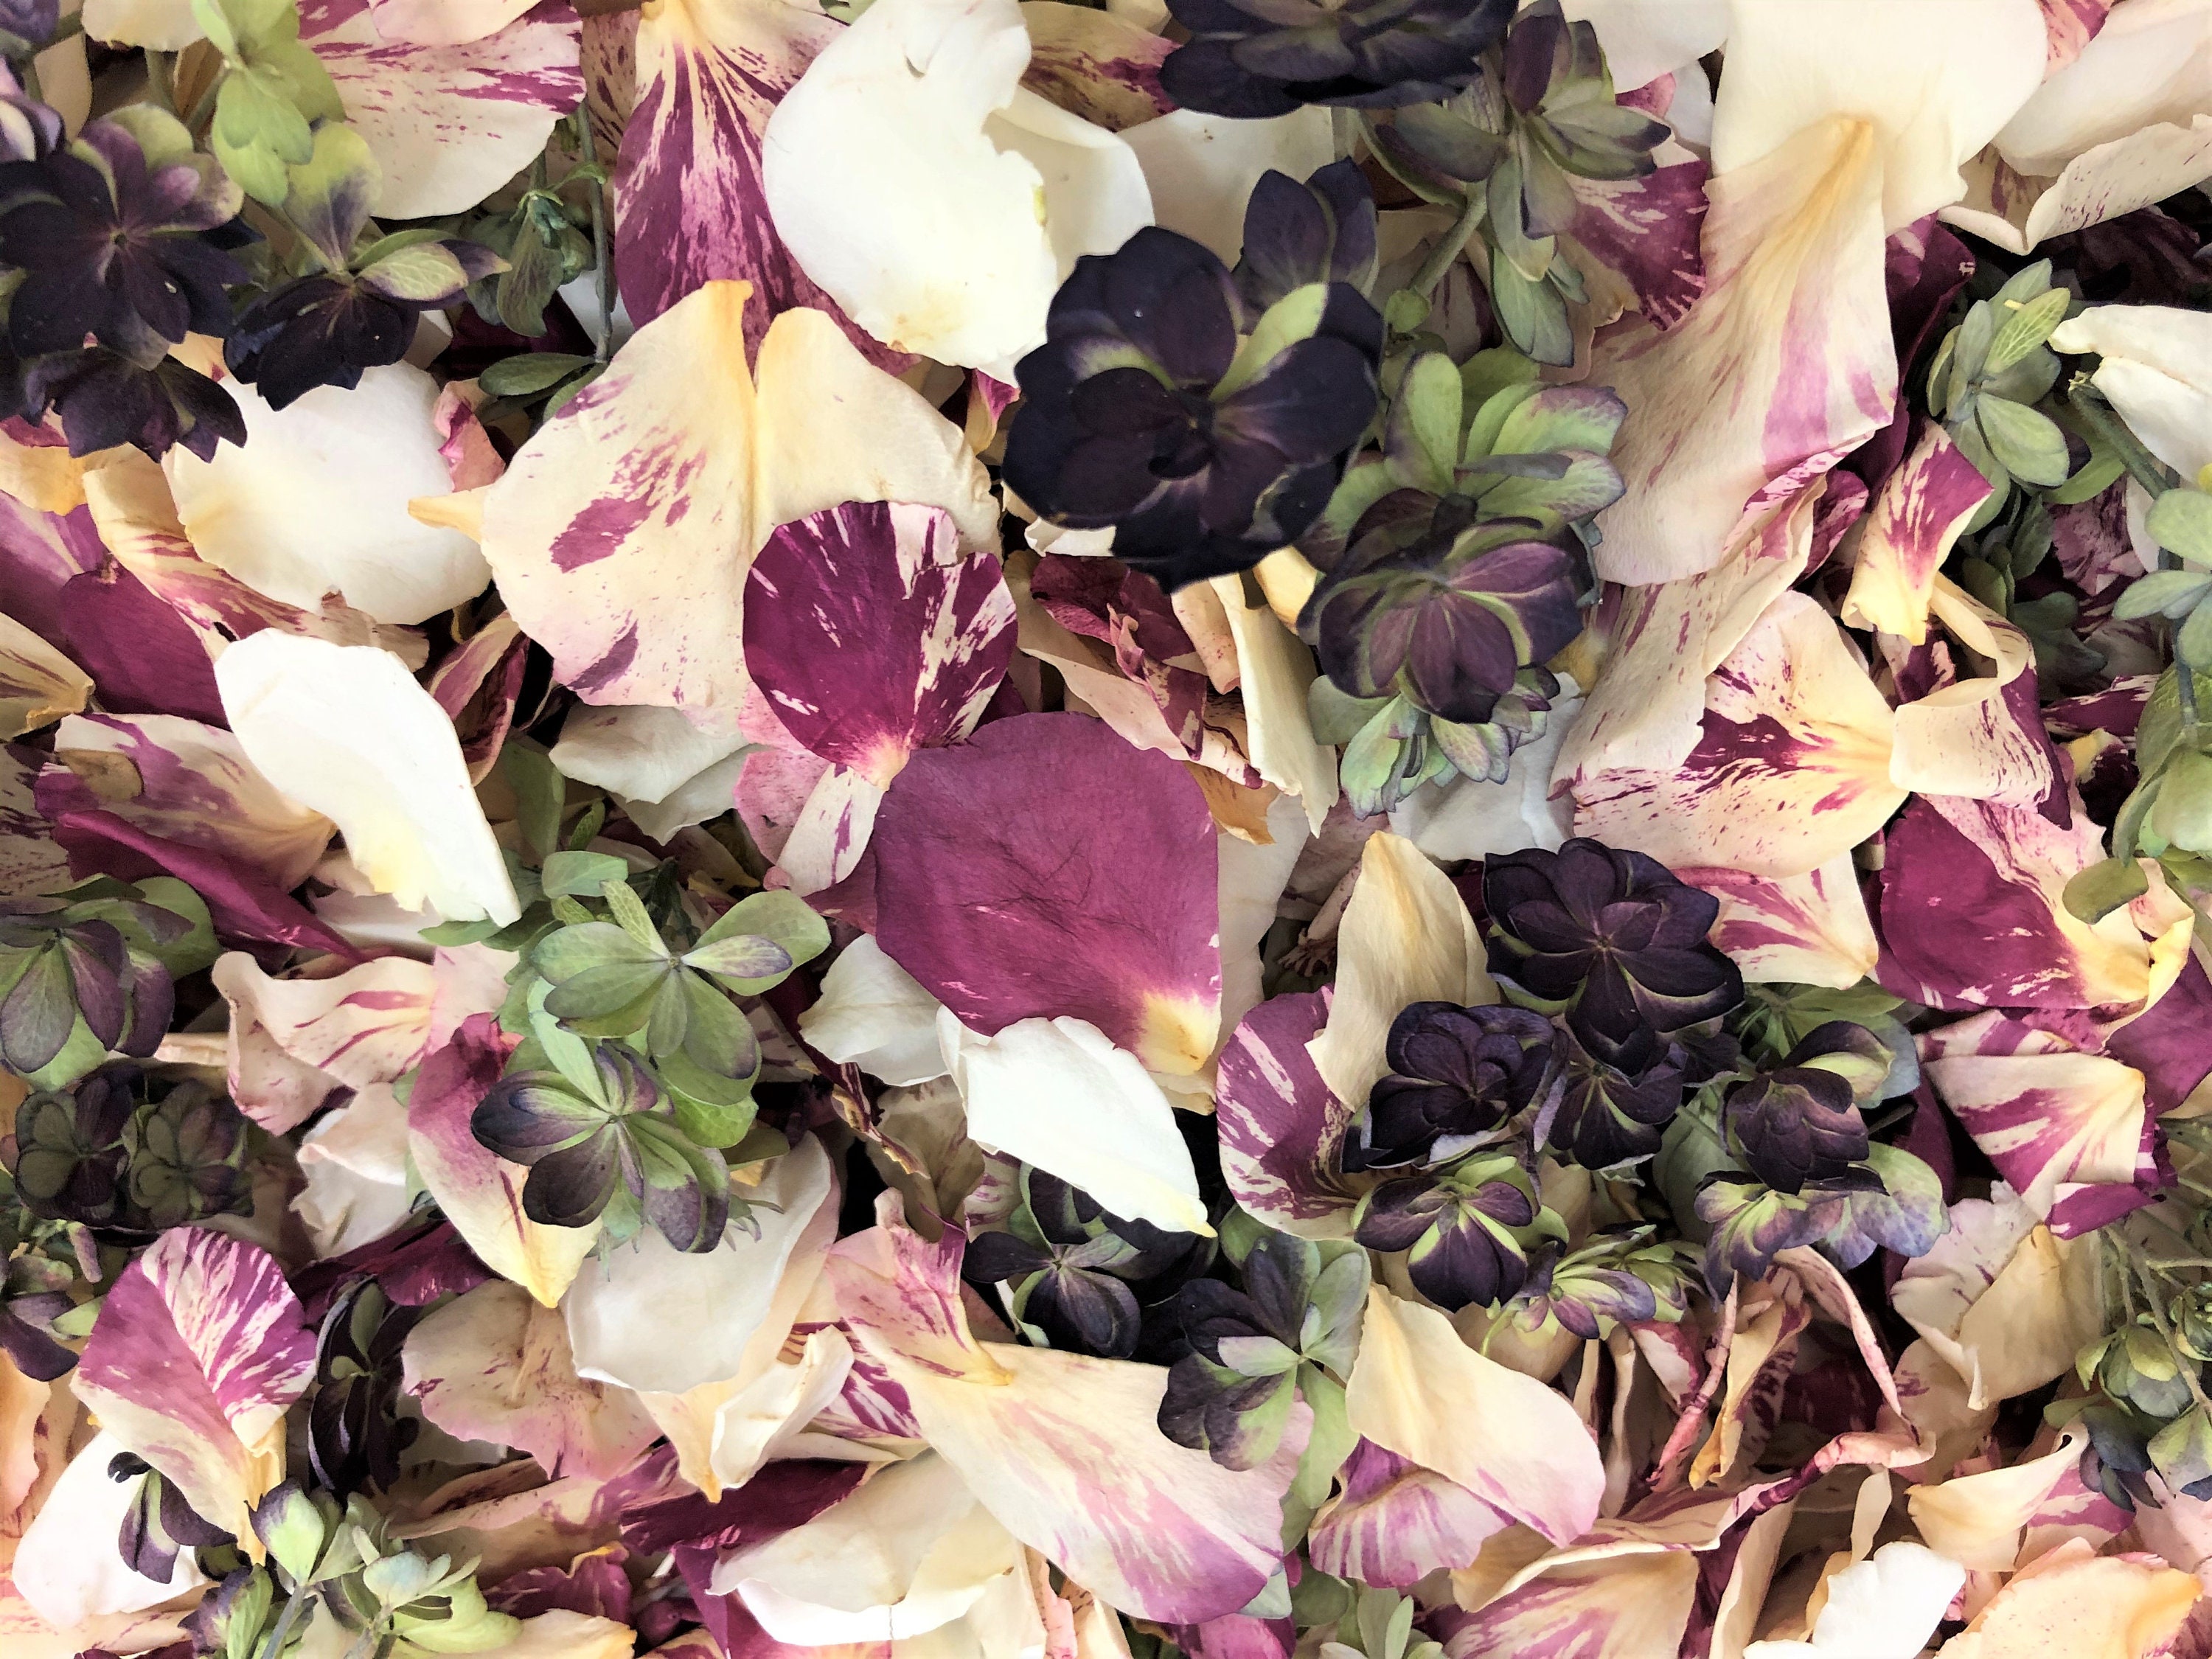 New 10 Cups Peppermint Twist Blend Rose & Hydrangea Petals. Real Petal Blend. Petals, Wedding Flower Confetti. Biodegradable